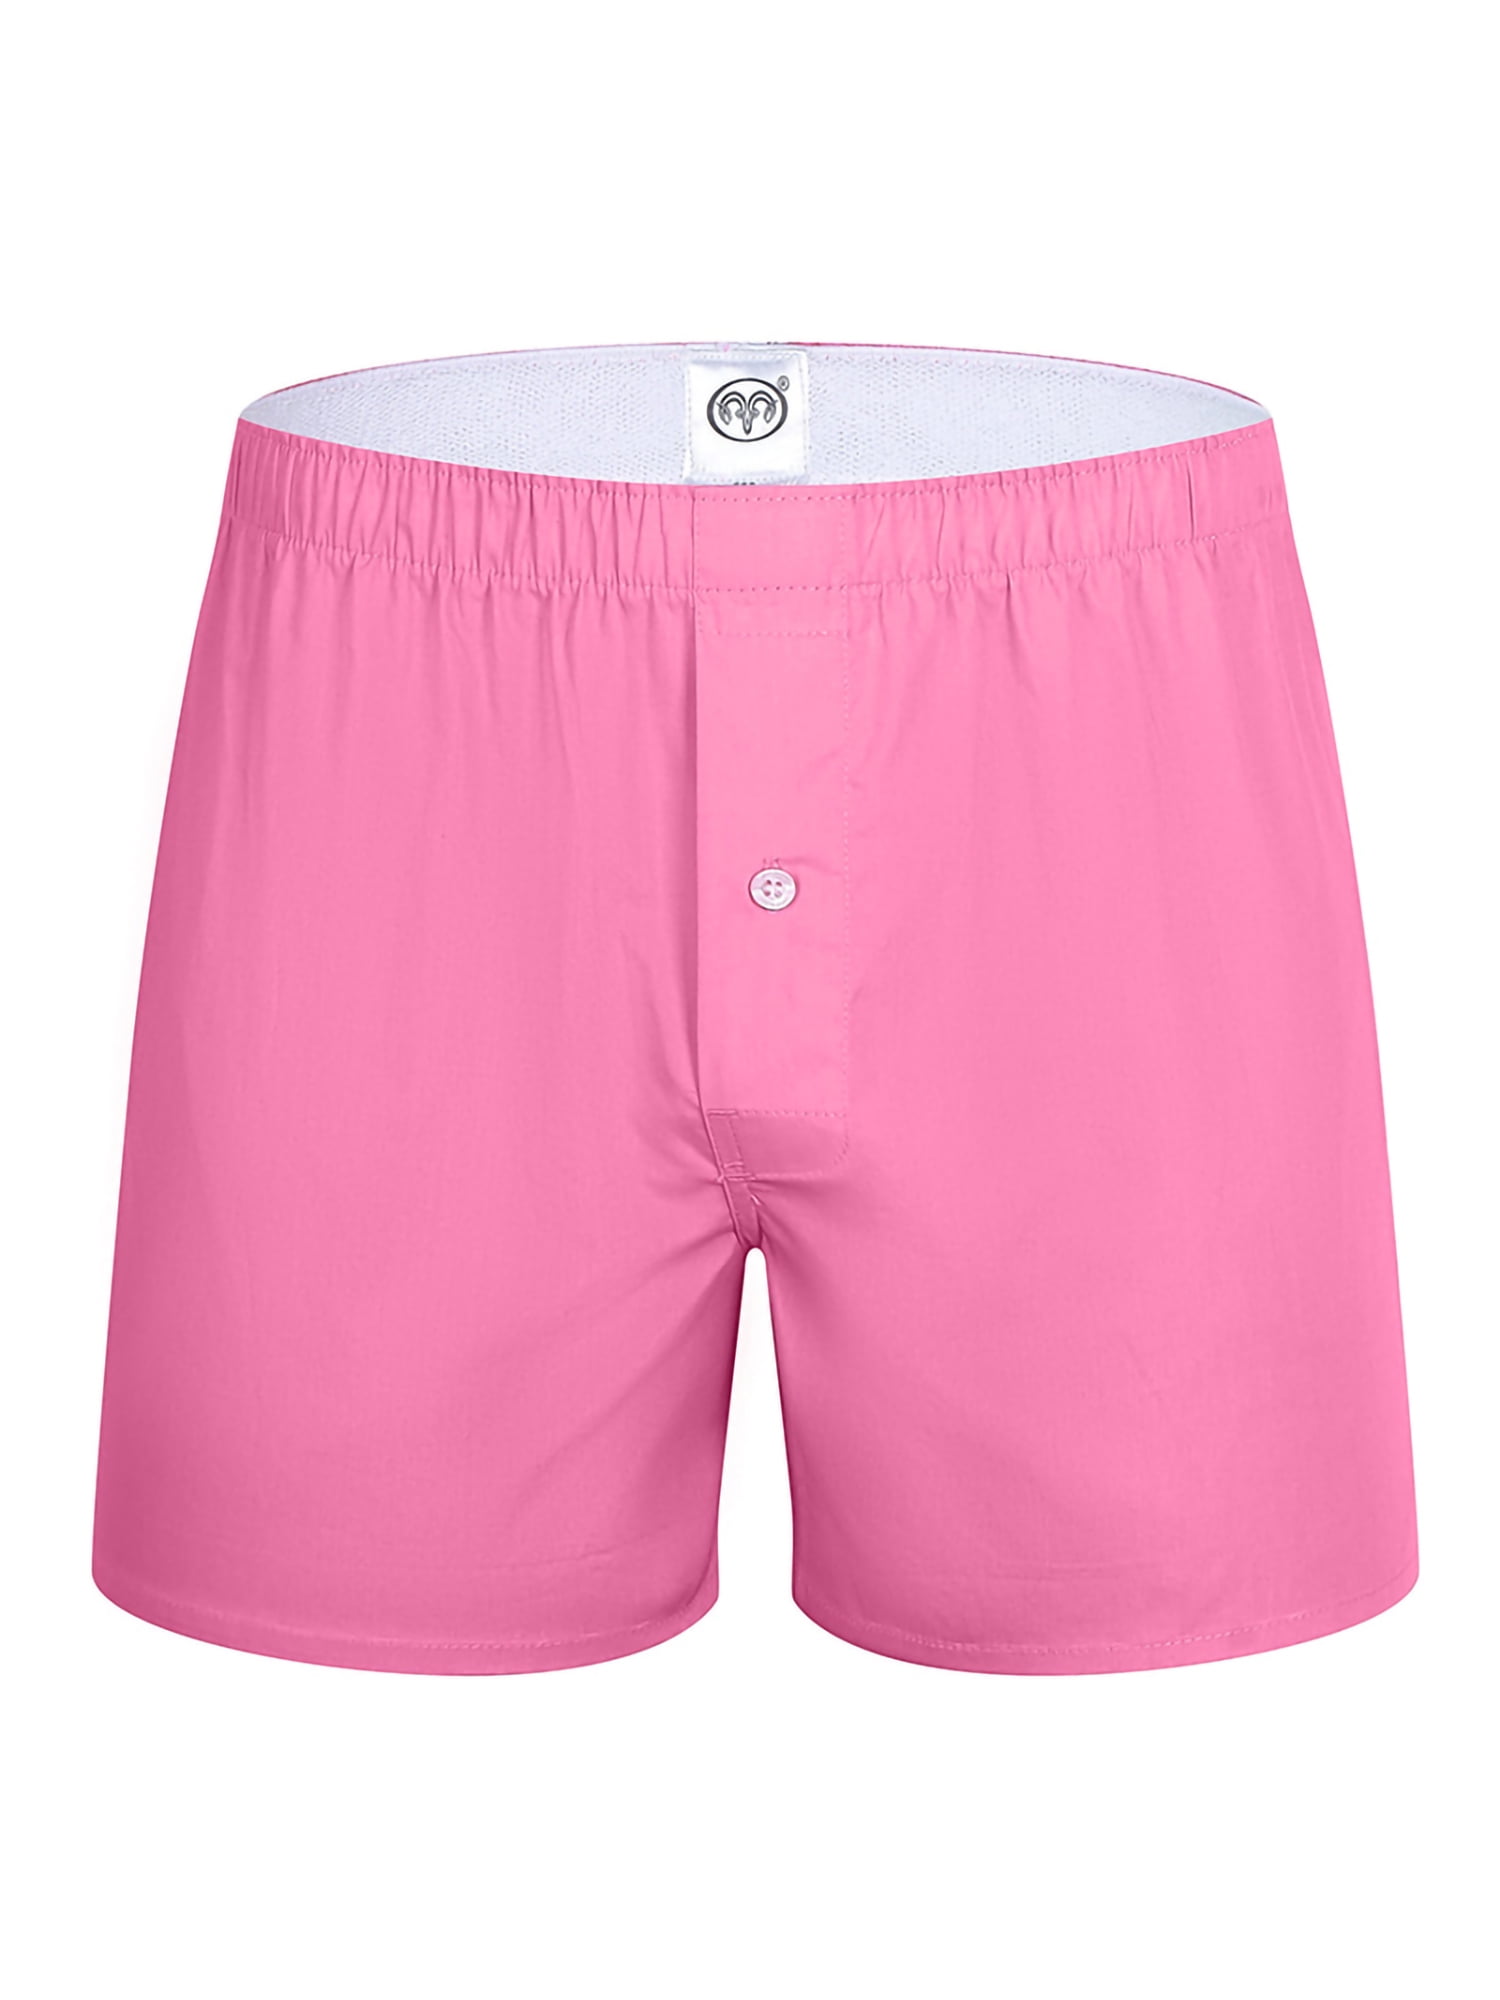 CVLIFE Mens Cotton Comfy Shorts Elastic Waist Summer Beach Underwear ...